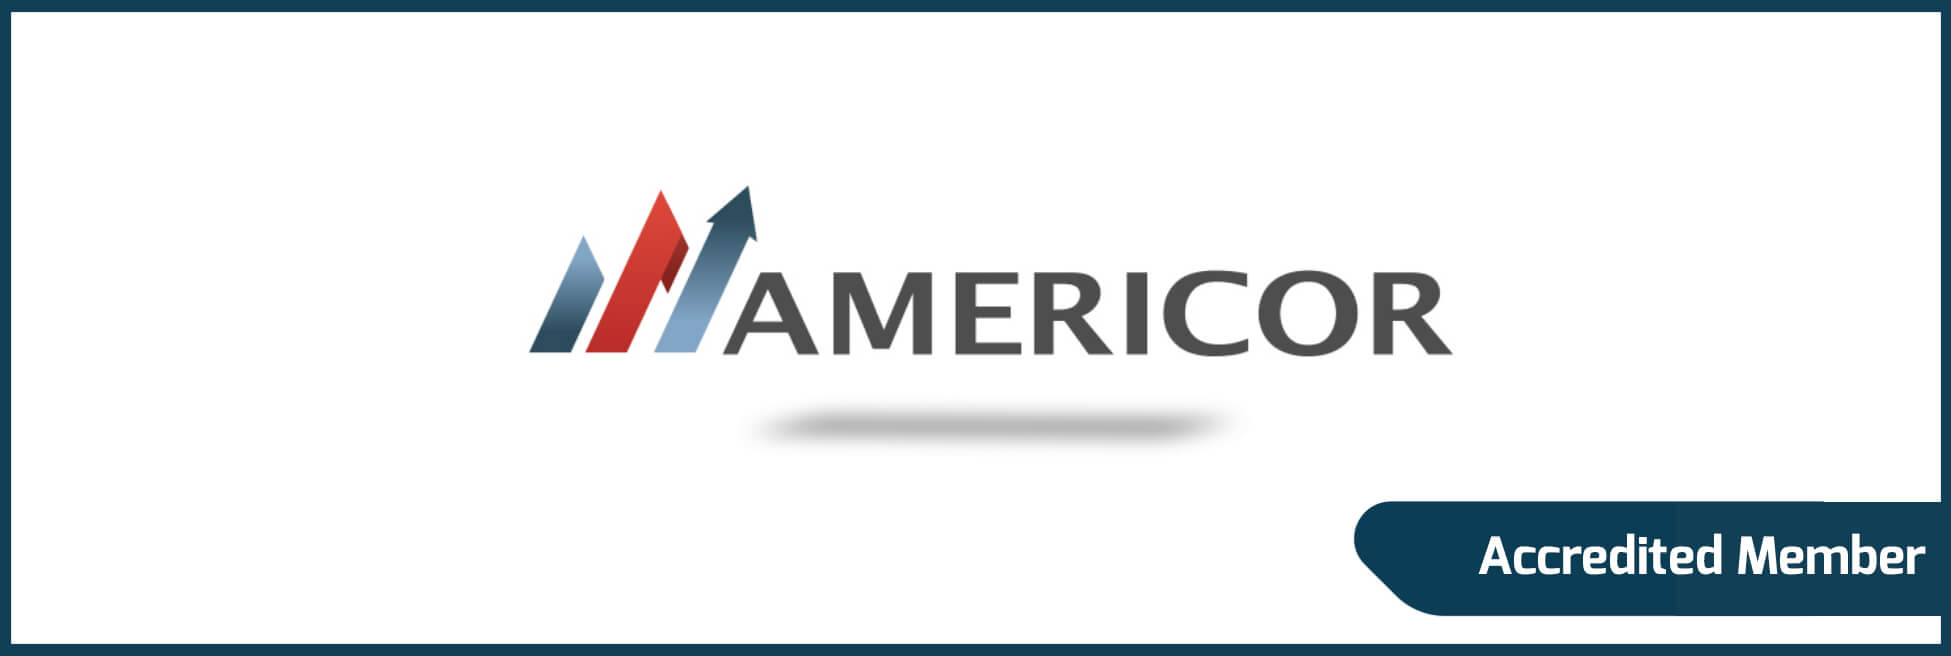 Americor Financial